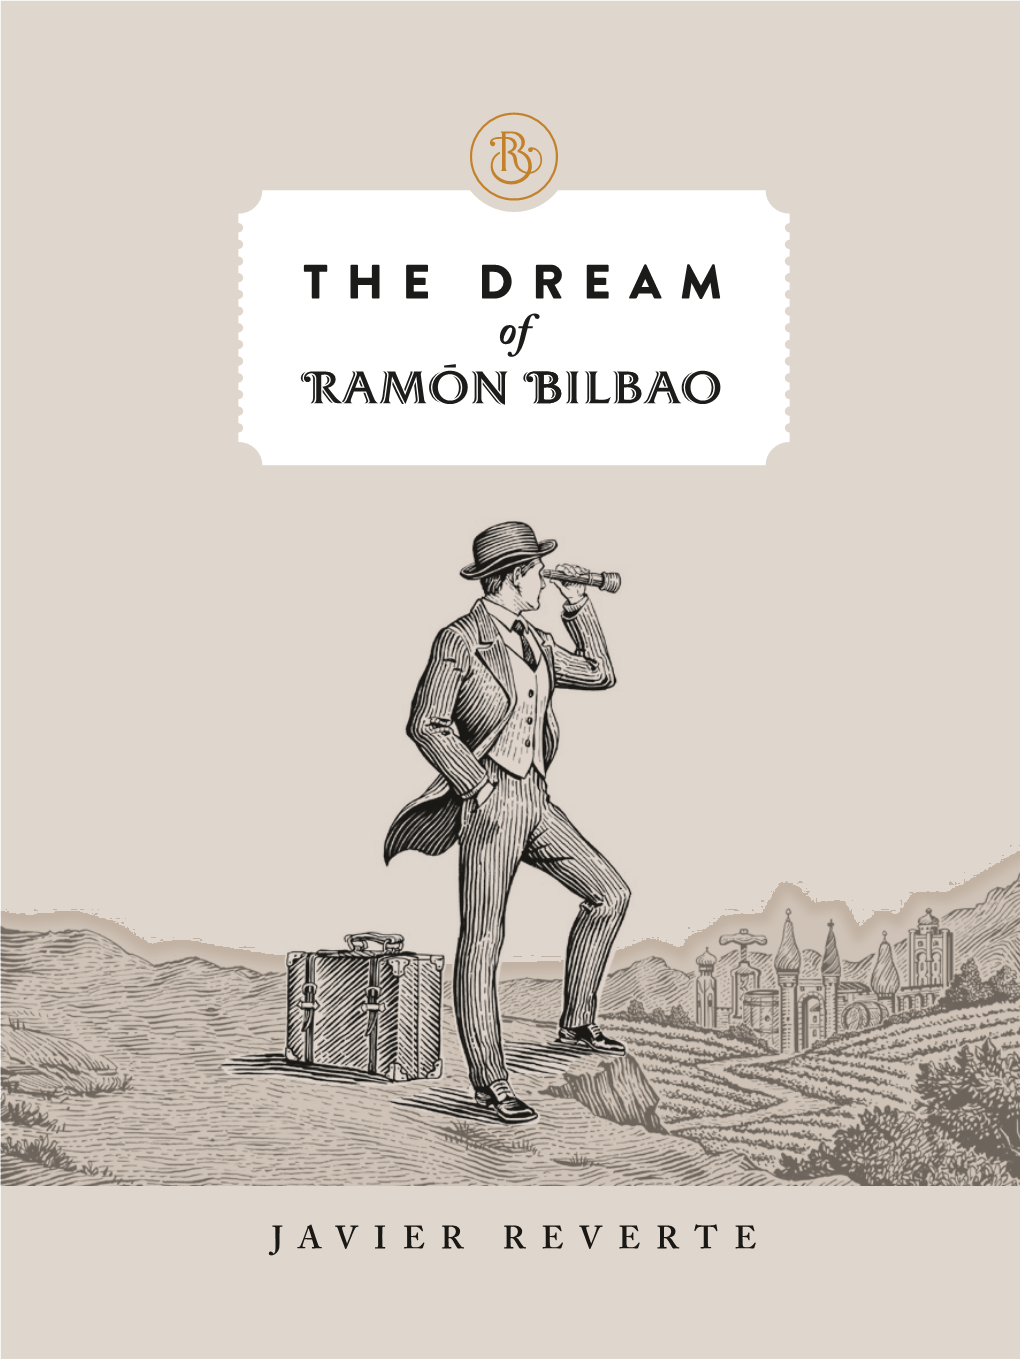 The Dream of Ramón Bilbao